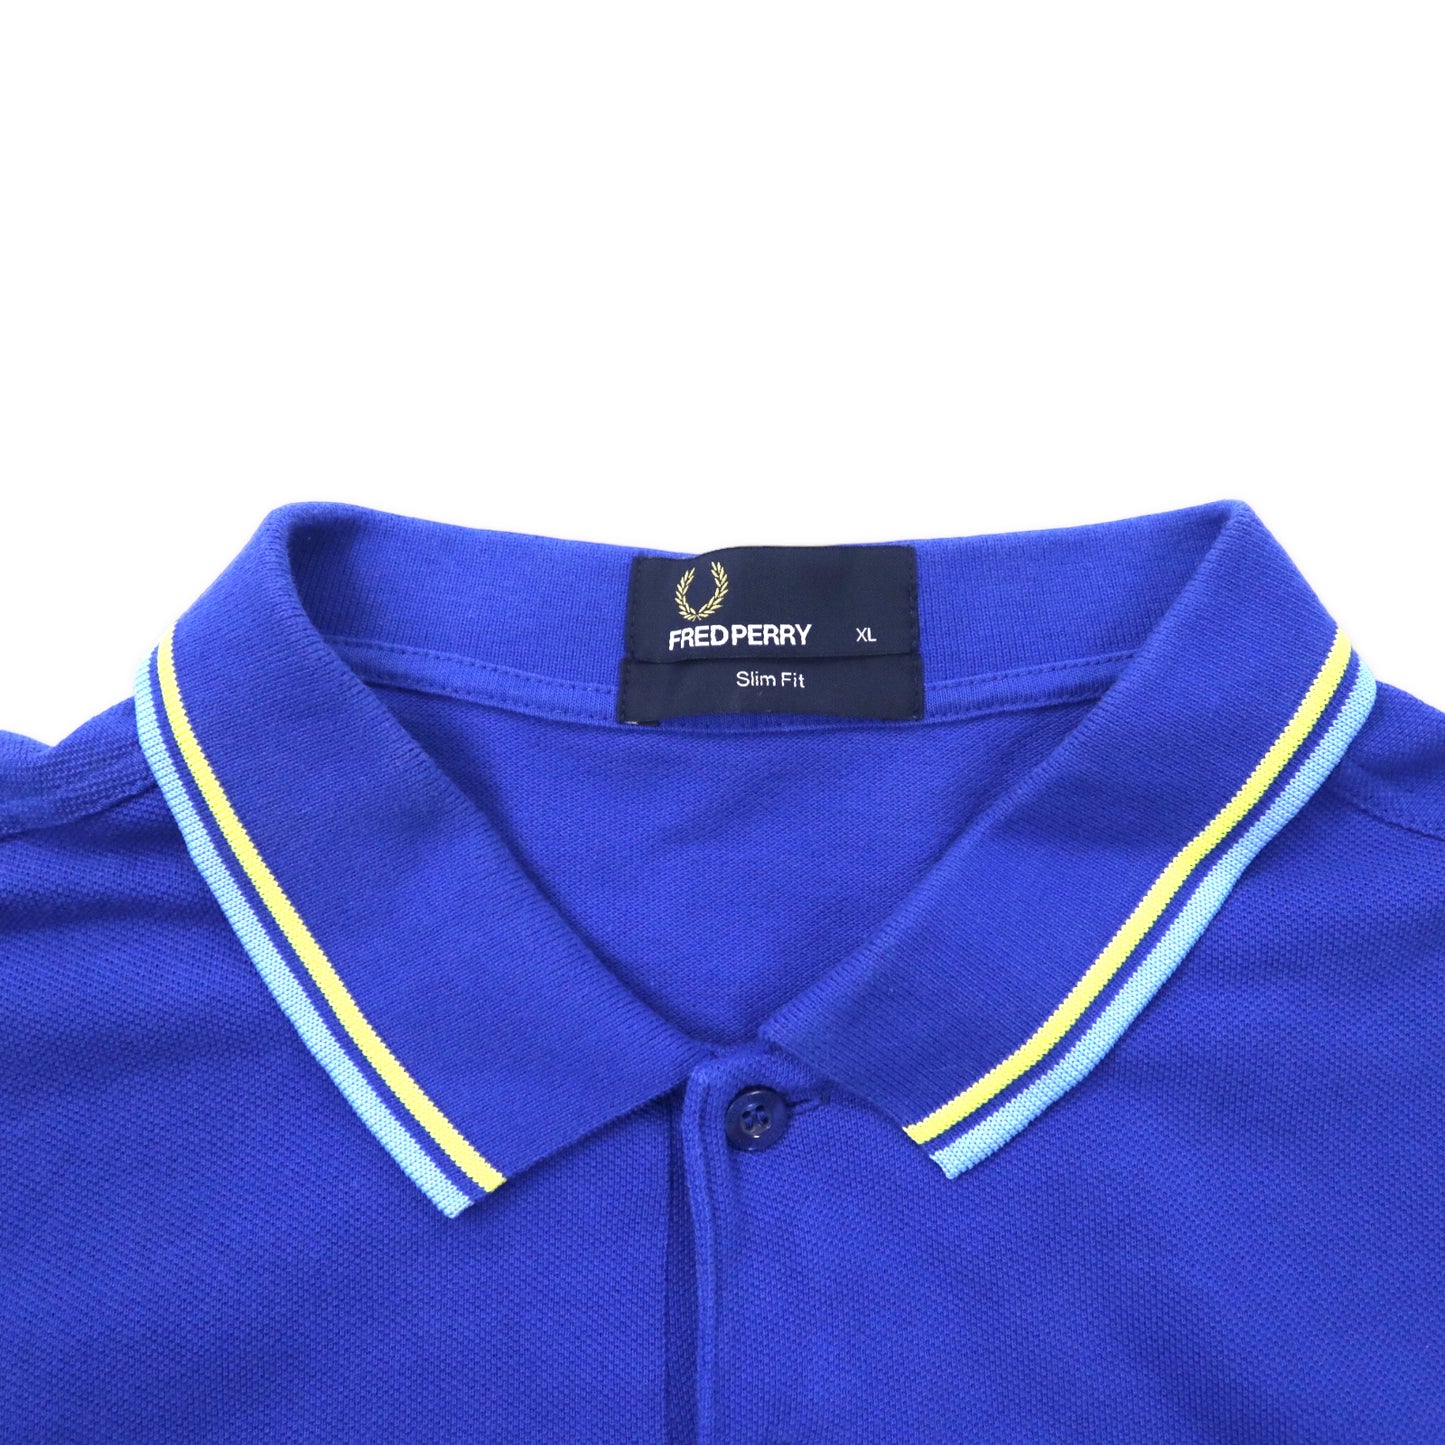 FRED PERRY ポロシャツ XL ブルー コットン SLIM FIT ワンポイントロゴ刺繍 M3600